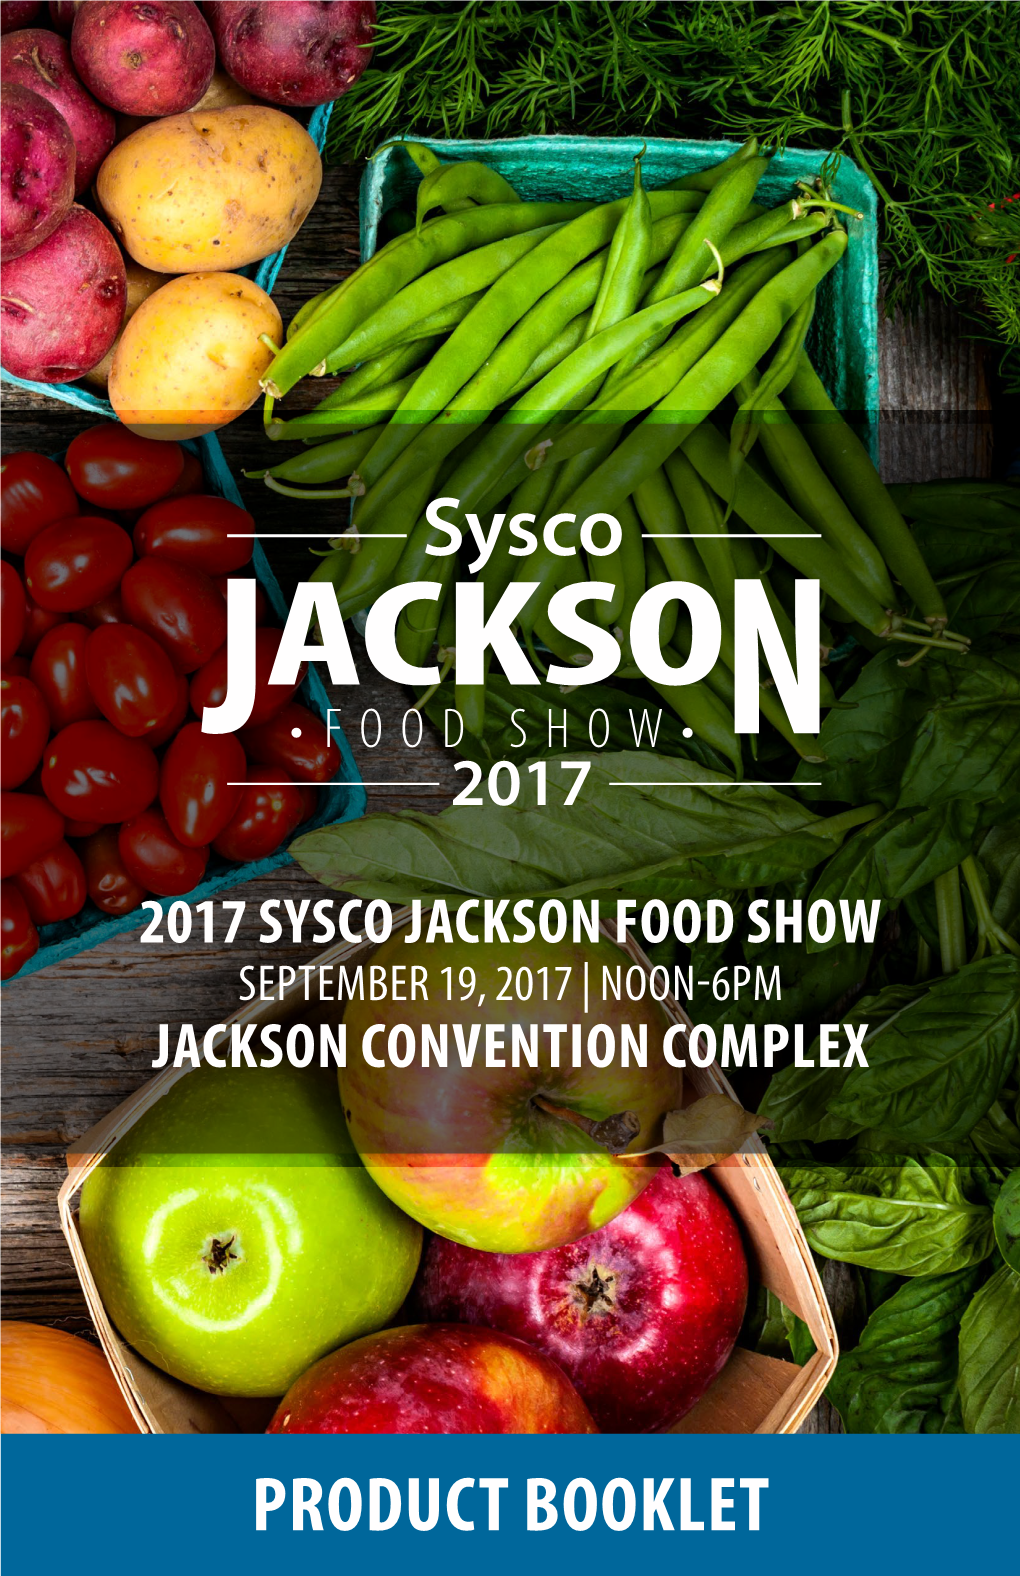 Sysco ACKSO J • FOOD SHOW• N 2017